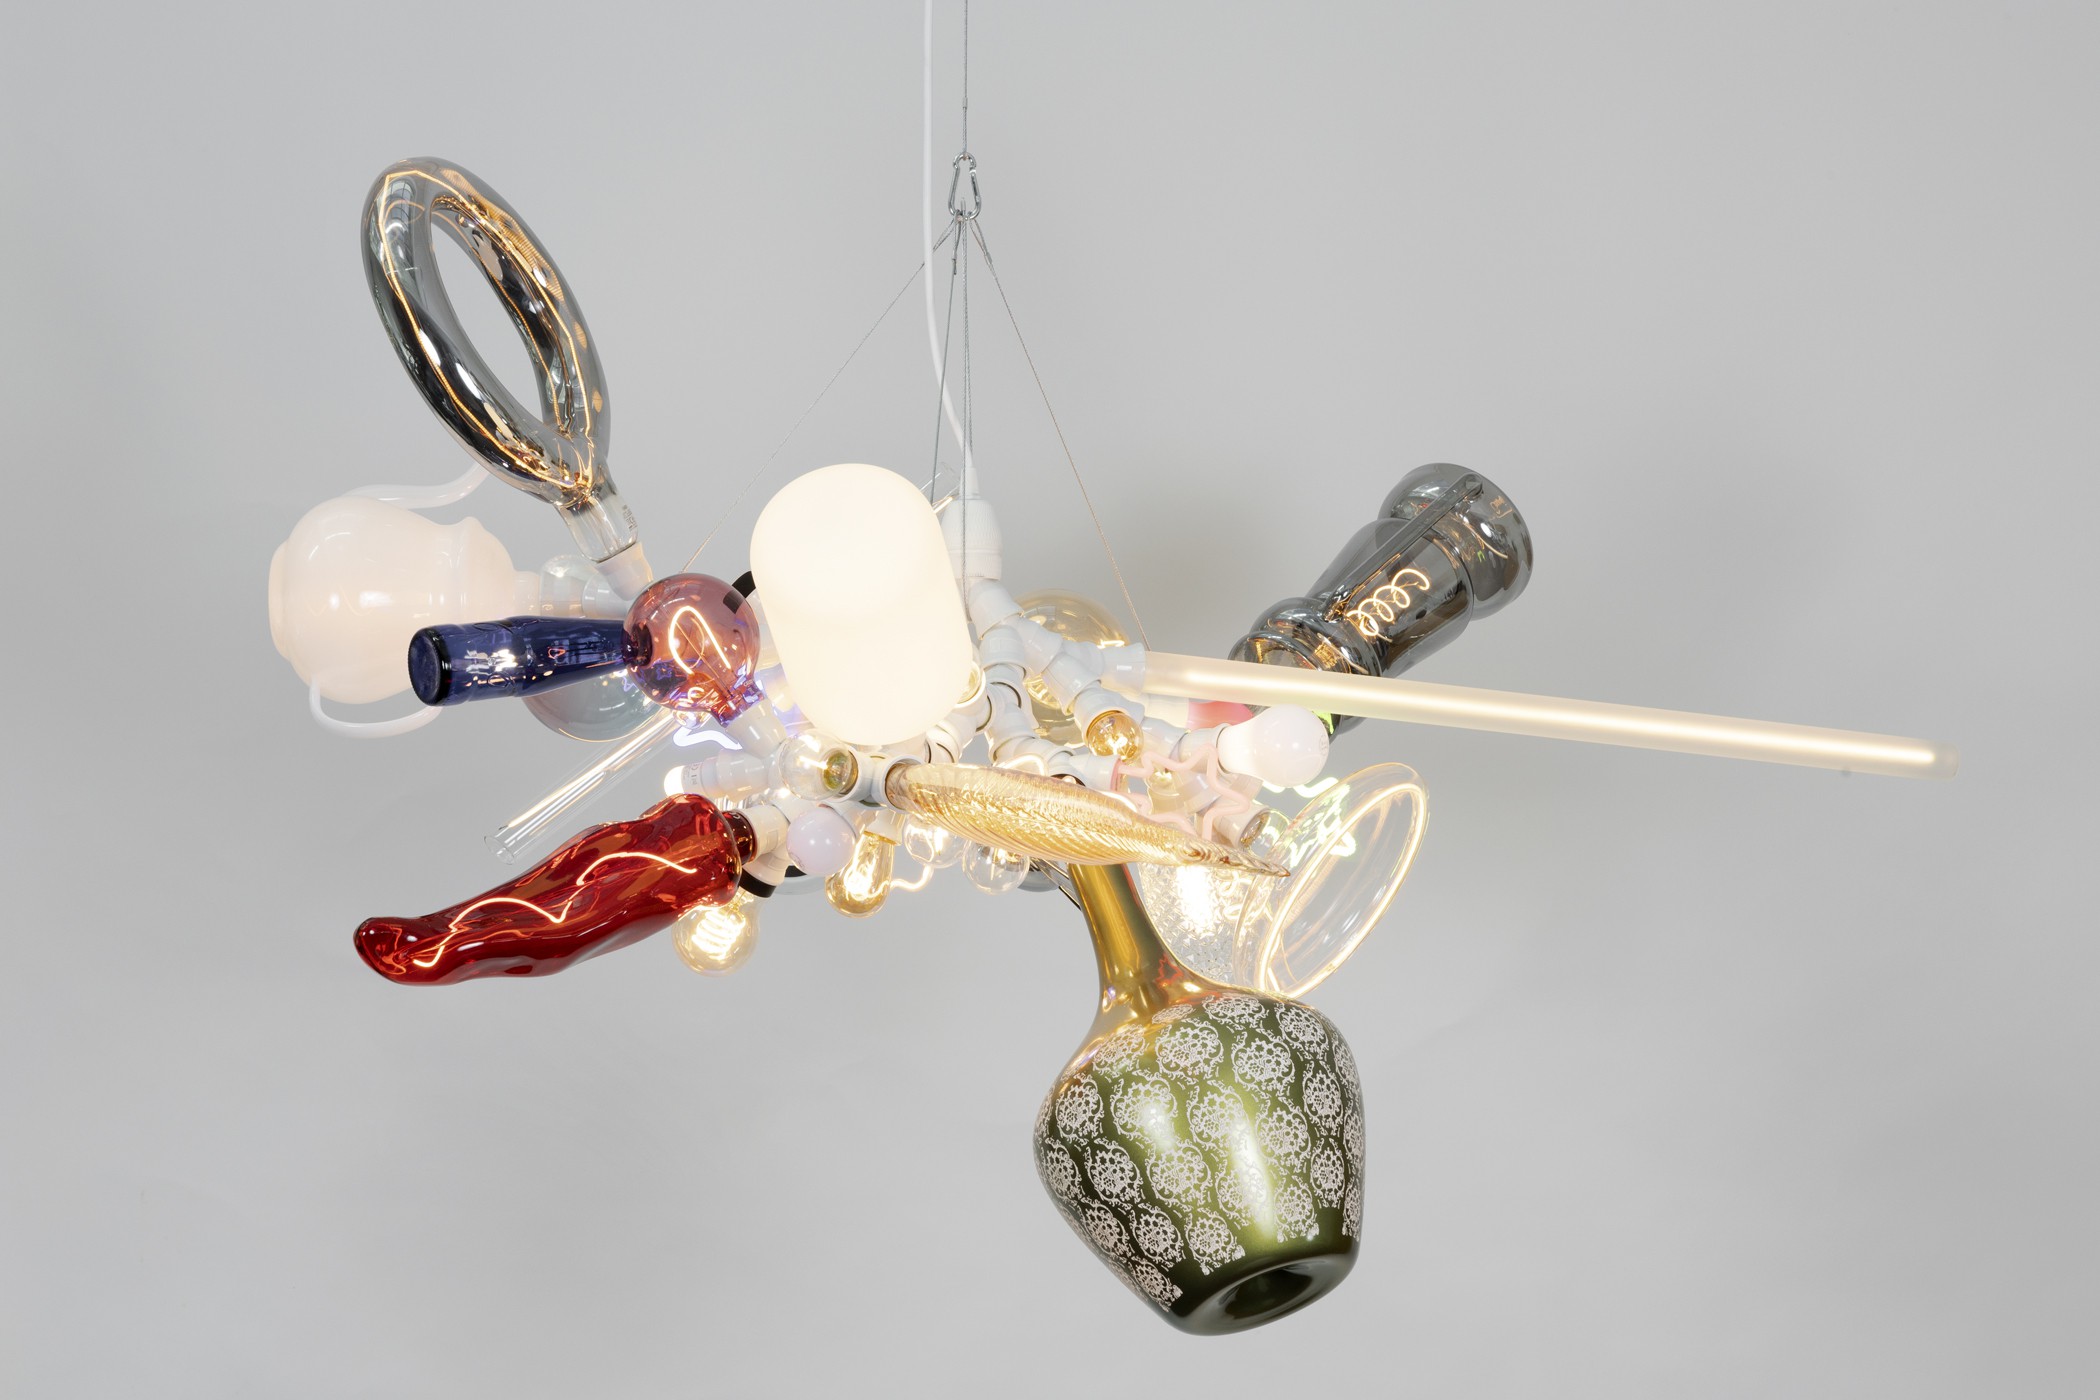 Kaspar Müller, Untitled, 2022, Lightbulbs, e27 splitters, steel cord, electrical wiring, e27 ceramic lamp socket, 90 x 130 x 110 cm, 35 1/2 x 51 x 43 1/2 in